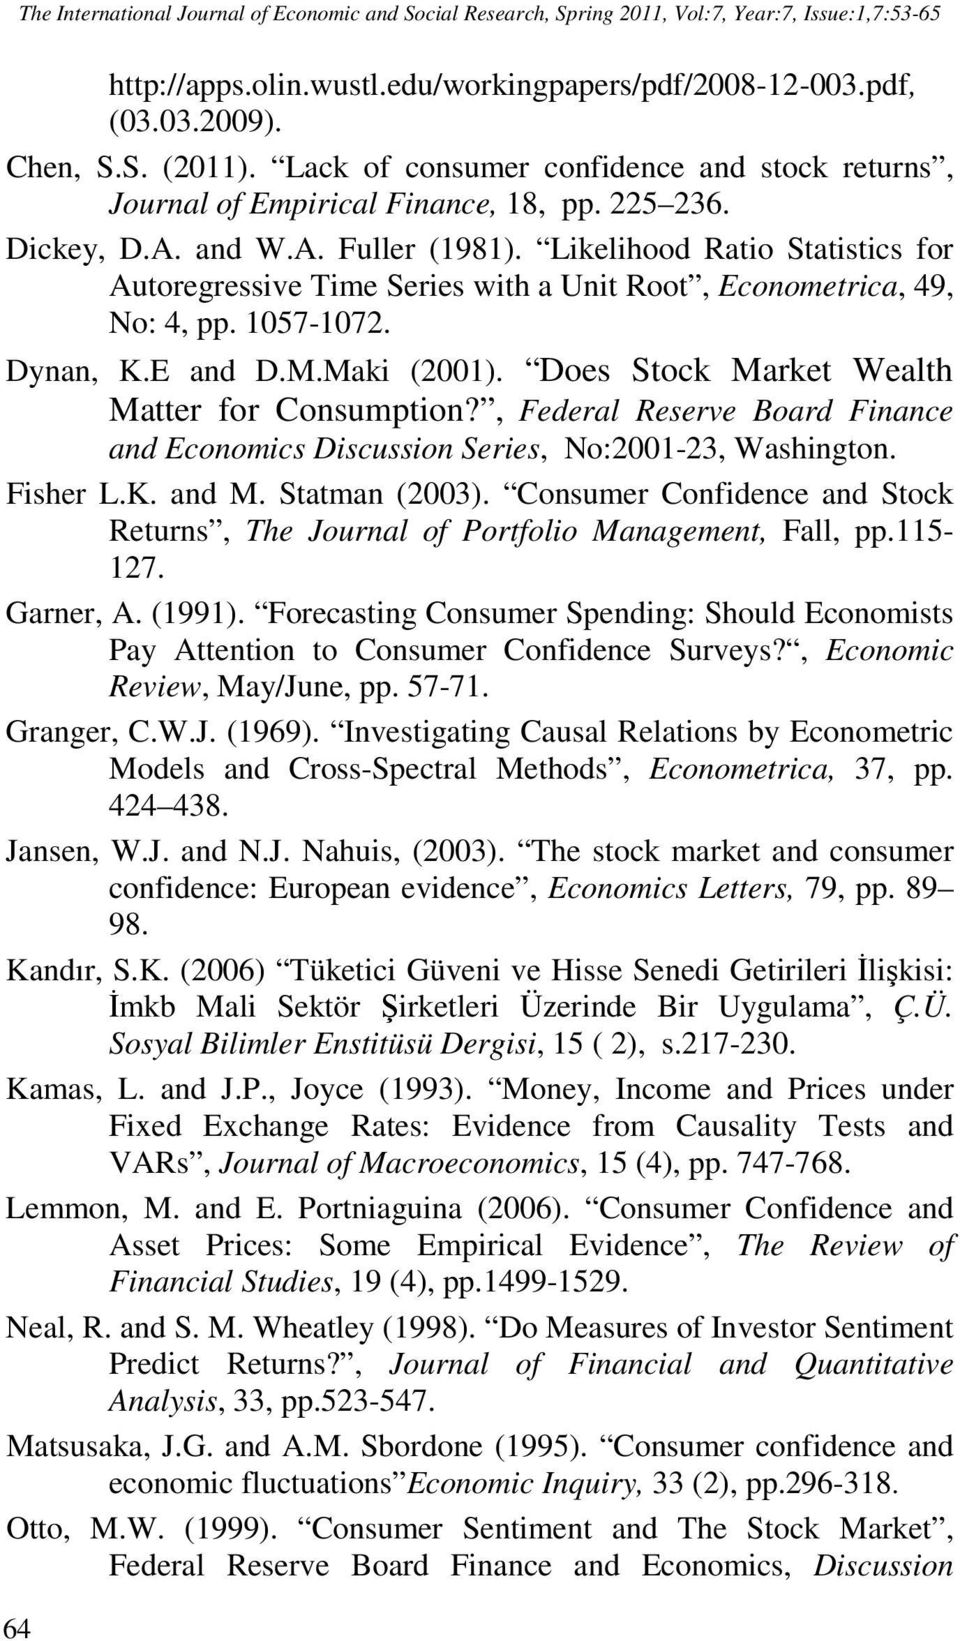 Likelihood Raio Saisics for Auoregressive Time Series wih a Uni Roo, Economerica, 49, No: 4, pp. 057-072. Dynan, K.E and D.M.Maki (200). Does Sock Marke Wealh Maer for Consumpion?